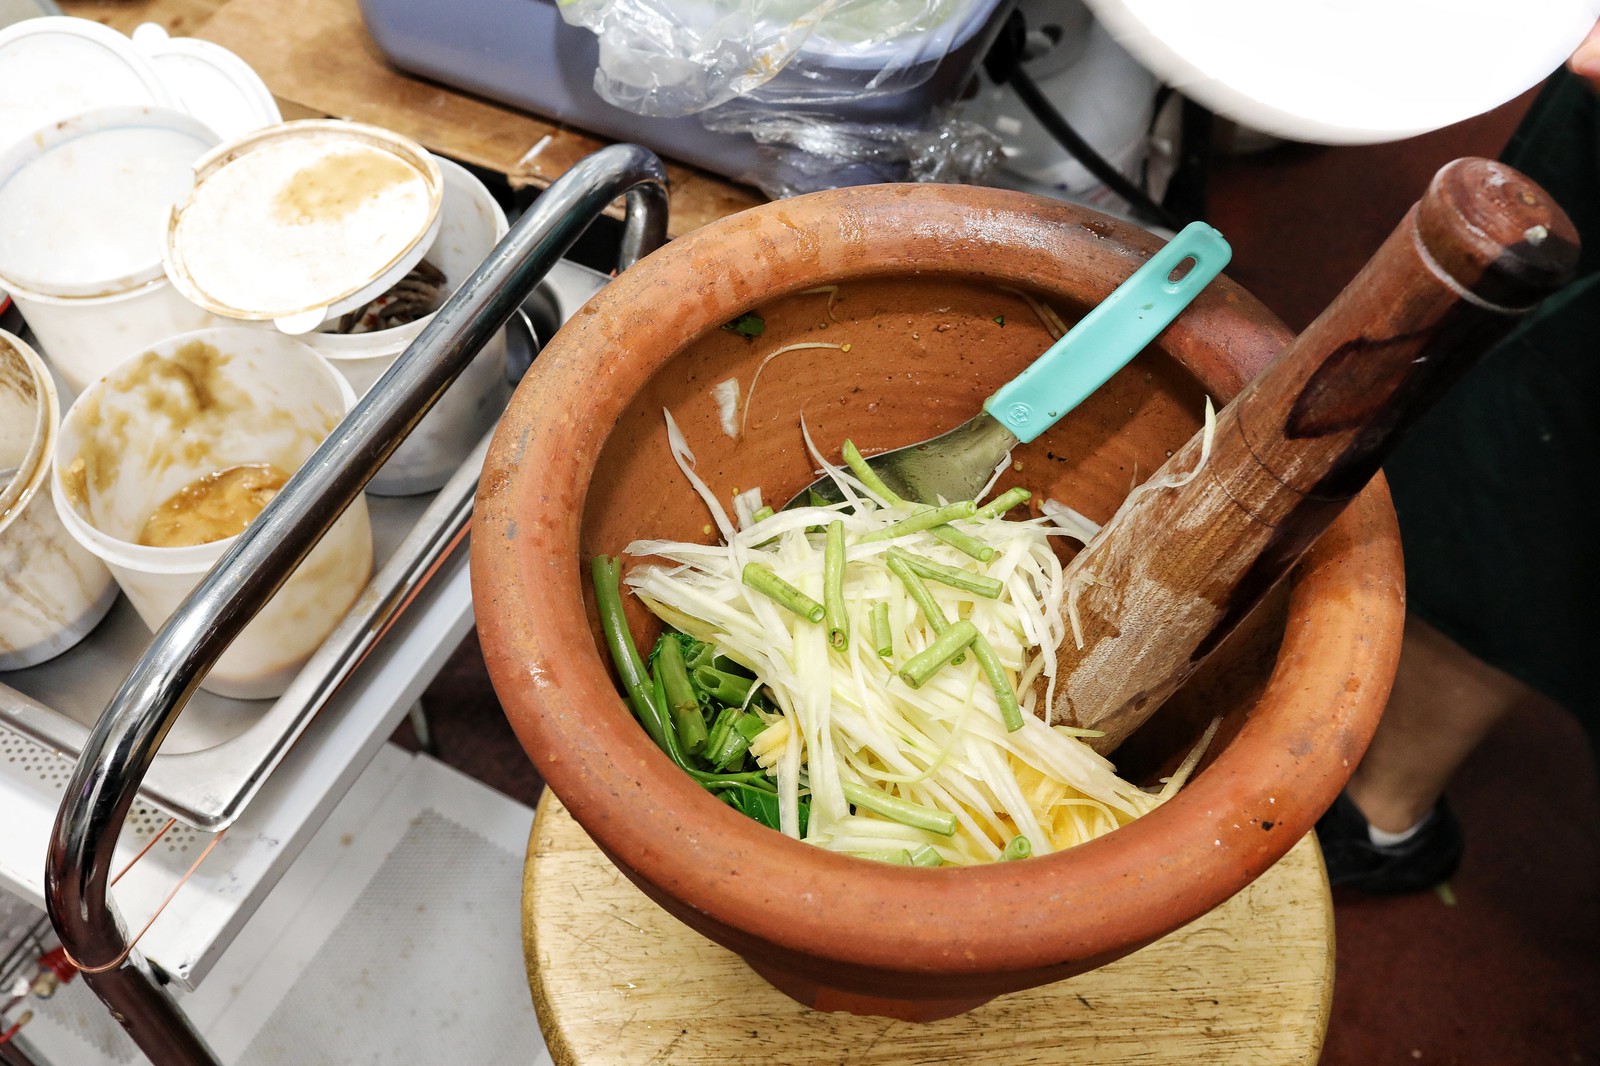 A mortar and pestle with jicama